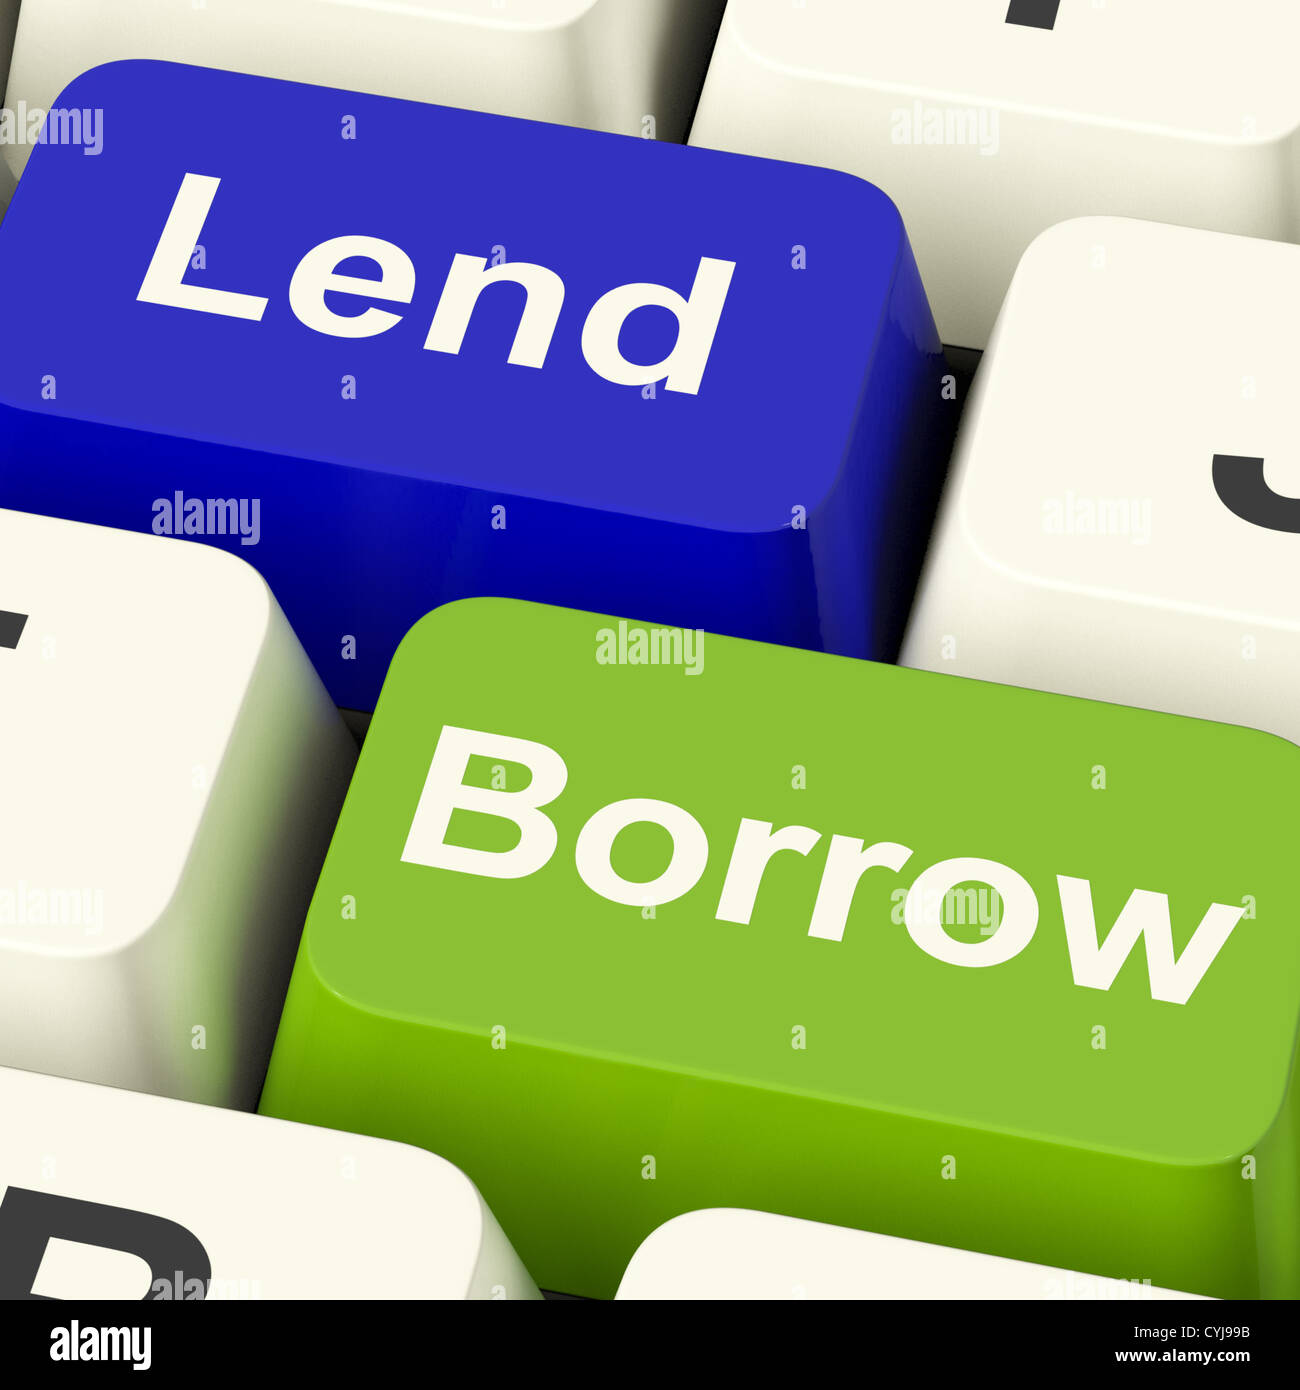 Lend And Borrow Keys Shows Borrowing Or Lending On The Internet Stock Photo